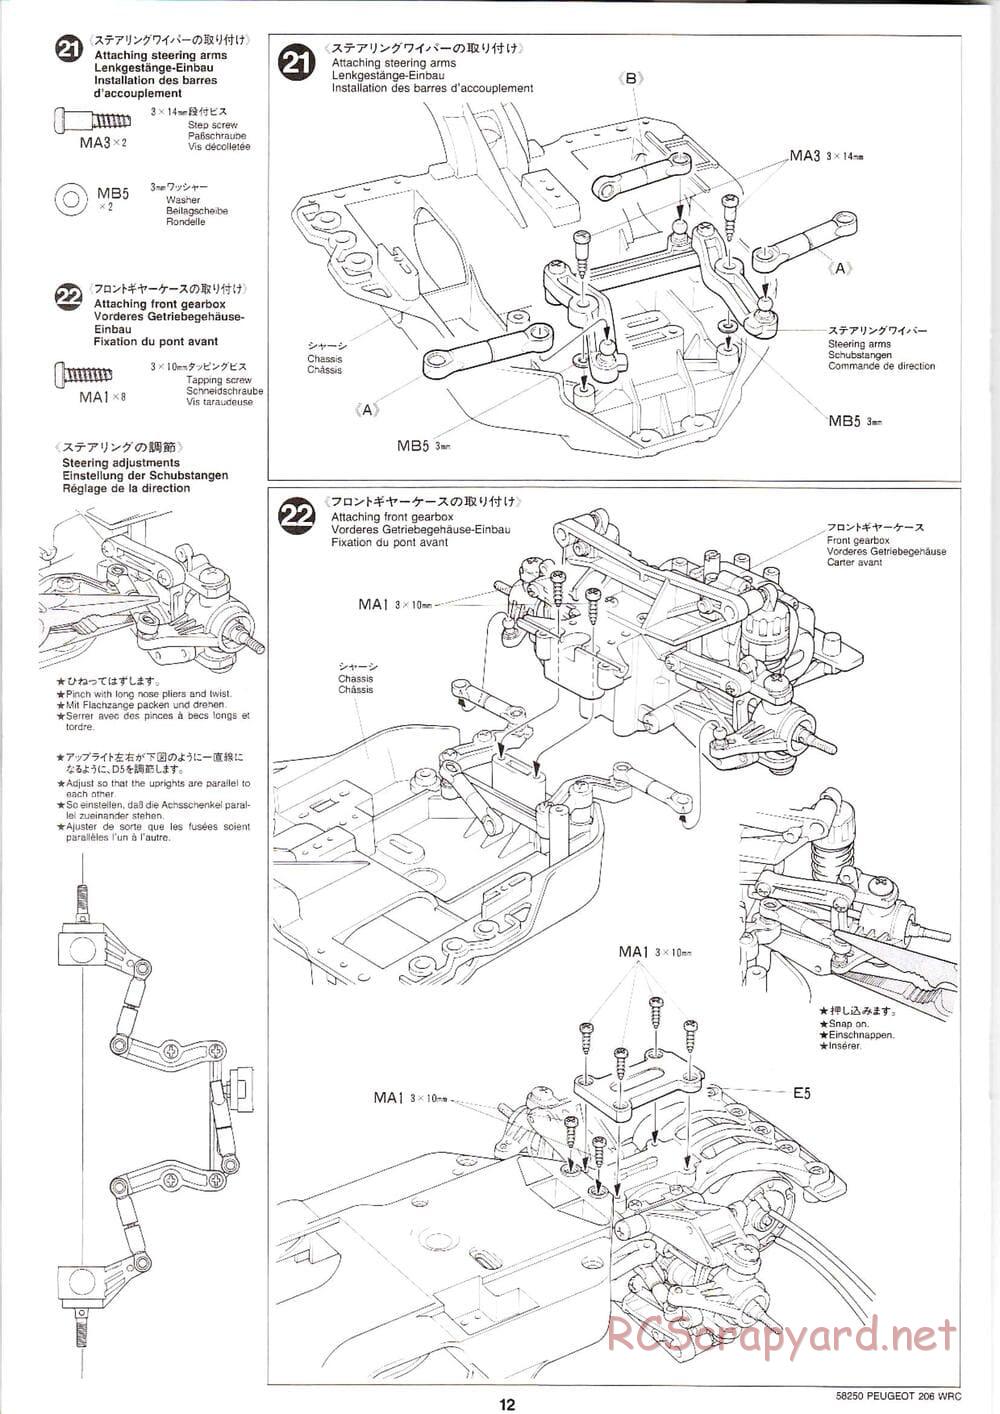 Tamiya - Peugeot 206 WRC - TA-03FS Chassis - Manual - Page 12